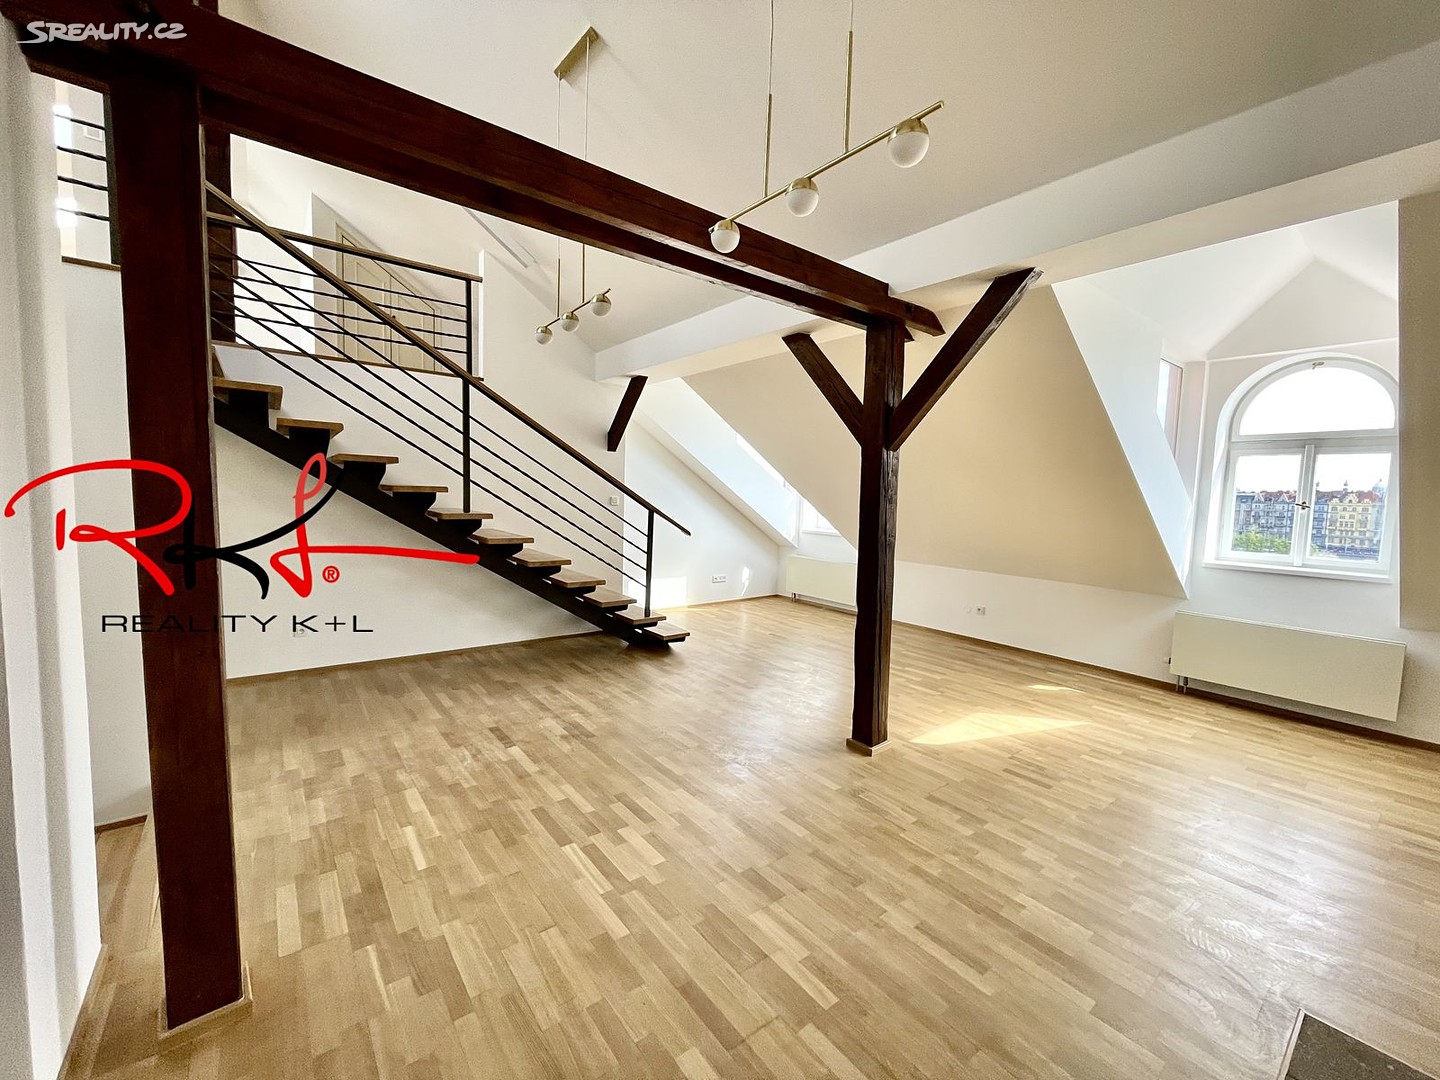 Pronájem bytu 4+1 169 m² (Mezonet), Praha 5 - Smíchov